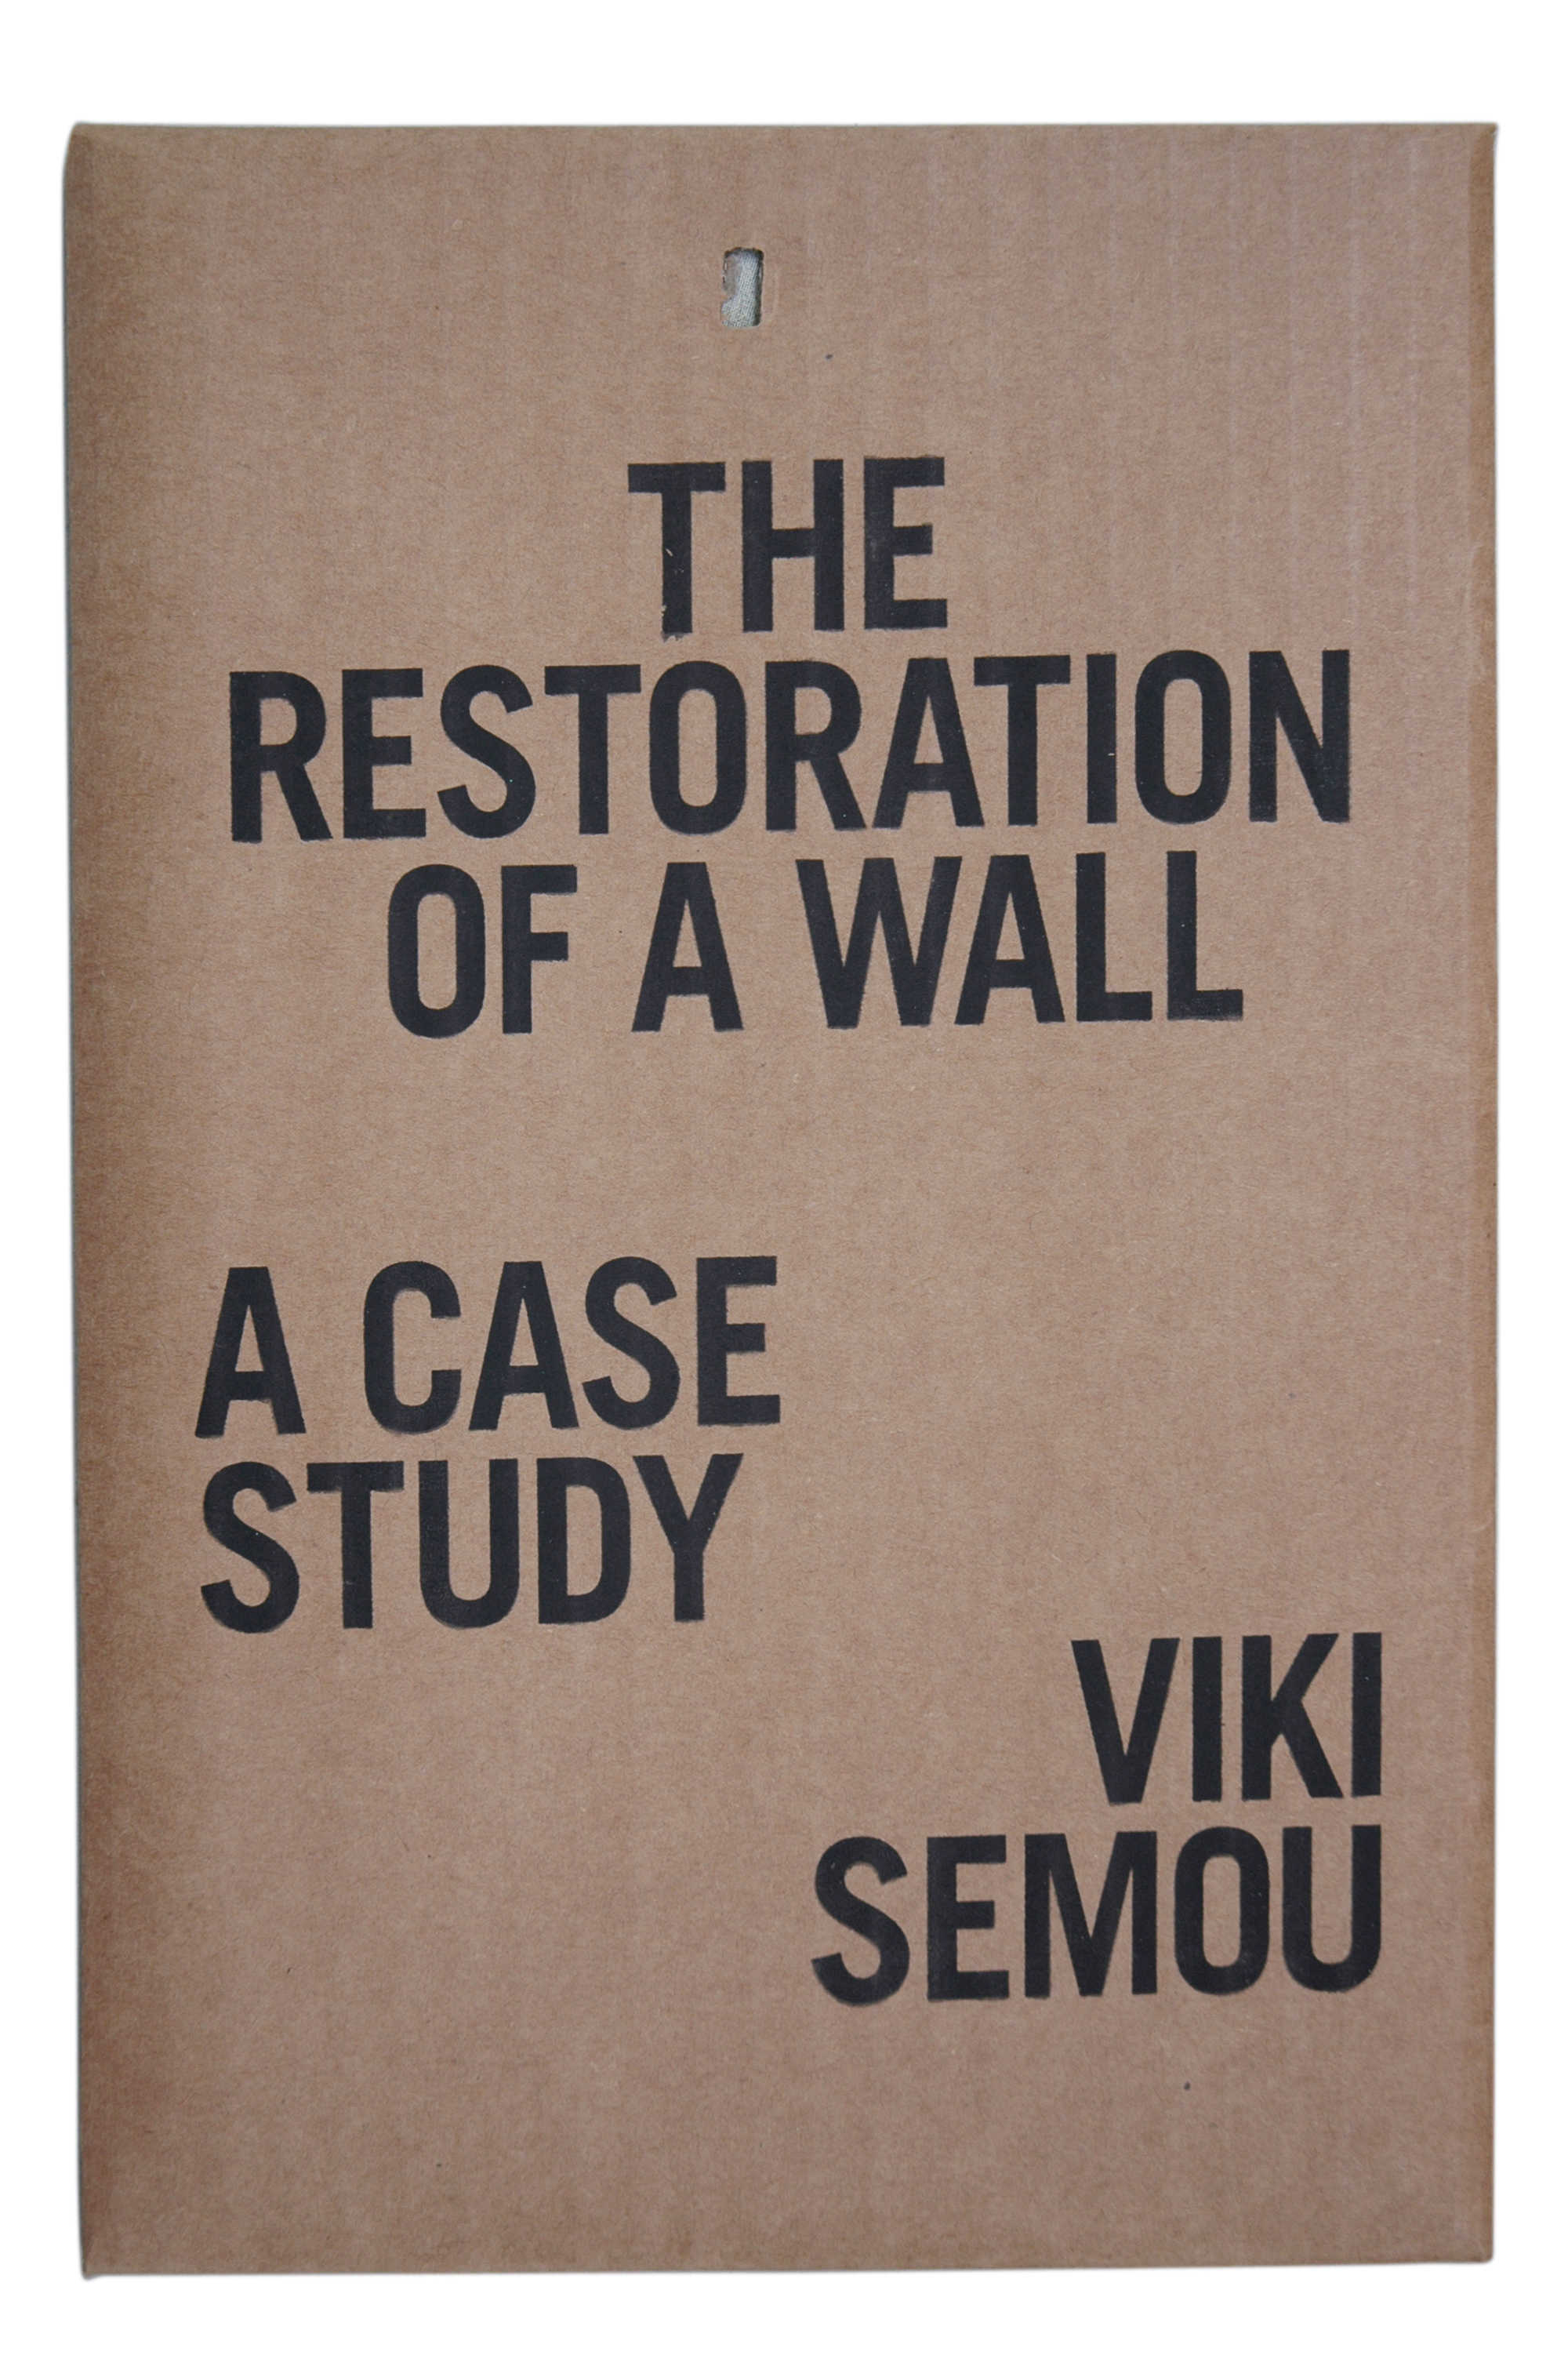 Viki Semou  [cover]